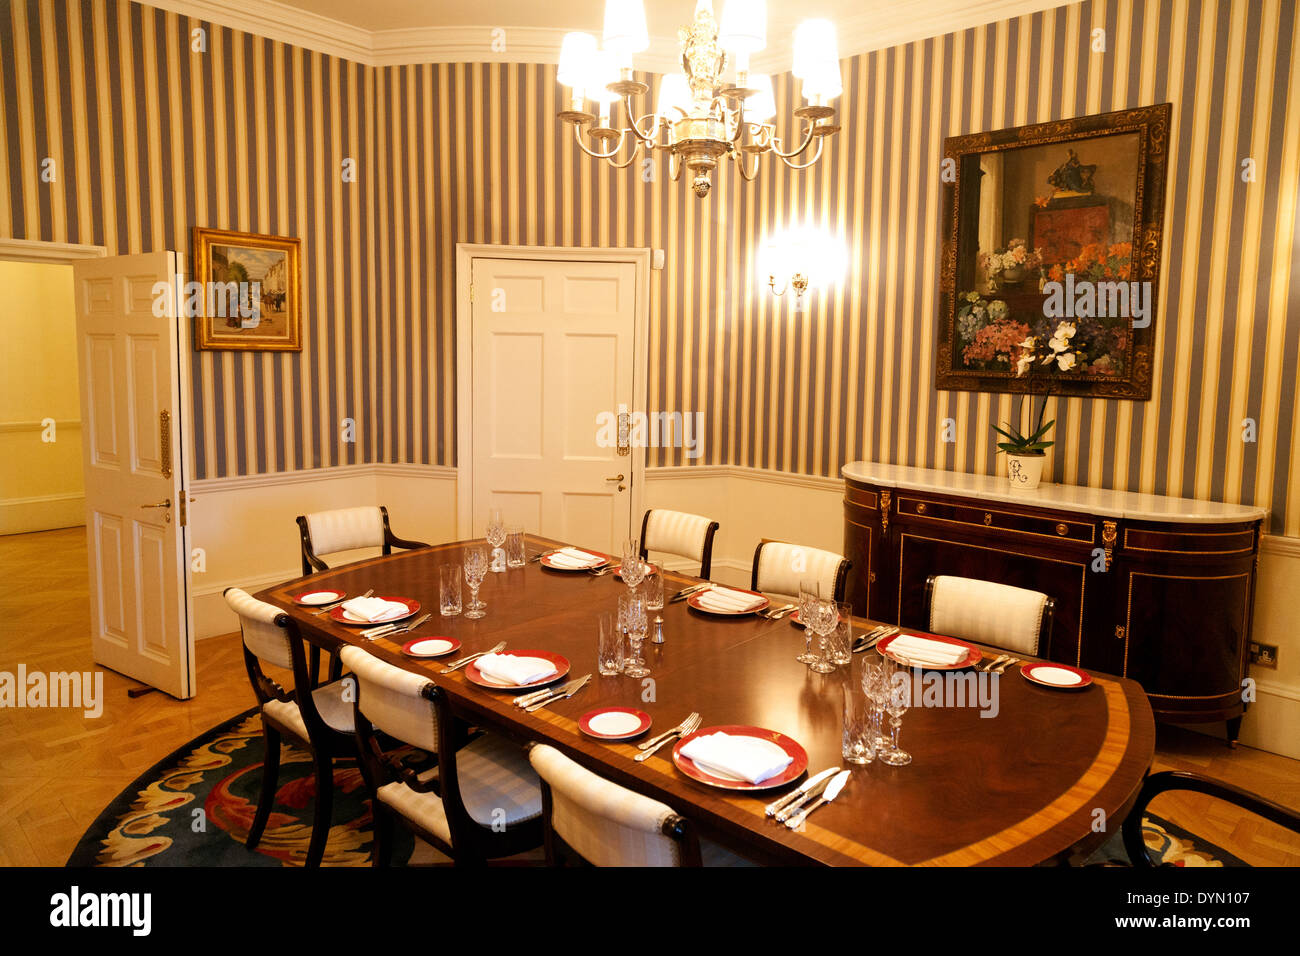 Die Prince Of Wales Suite, eine Luxus-Suite im Luxushotel Ritz, Piccadilly, London W1 England UK Stockfoto